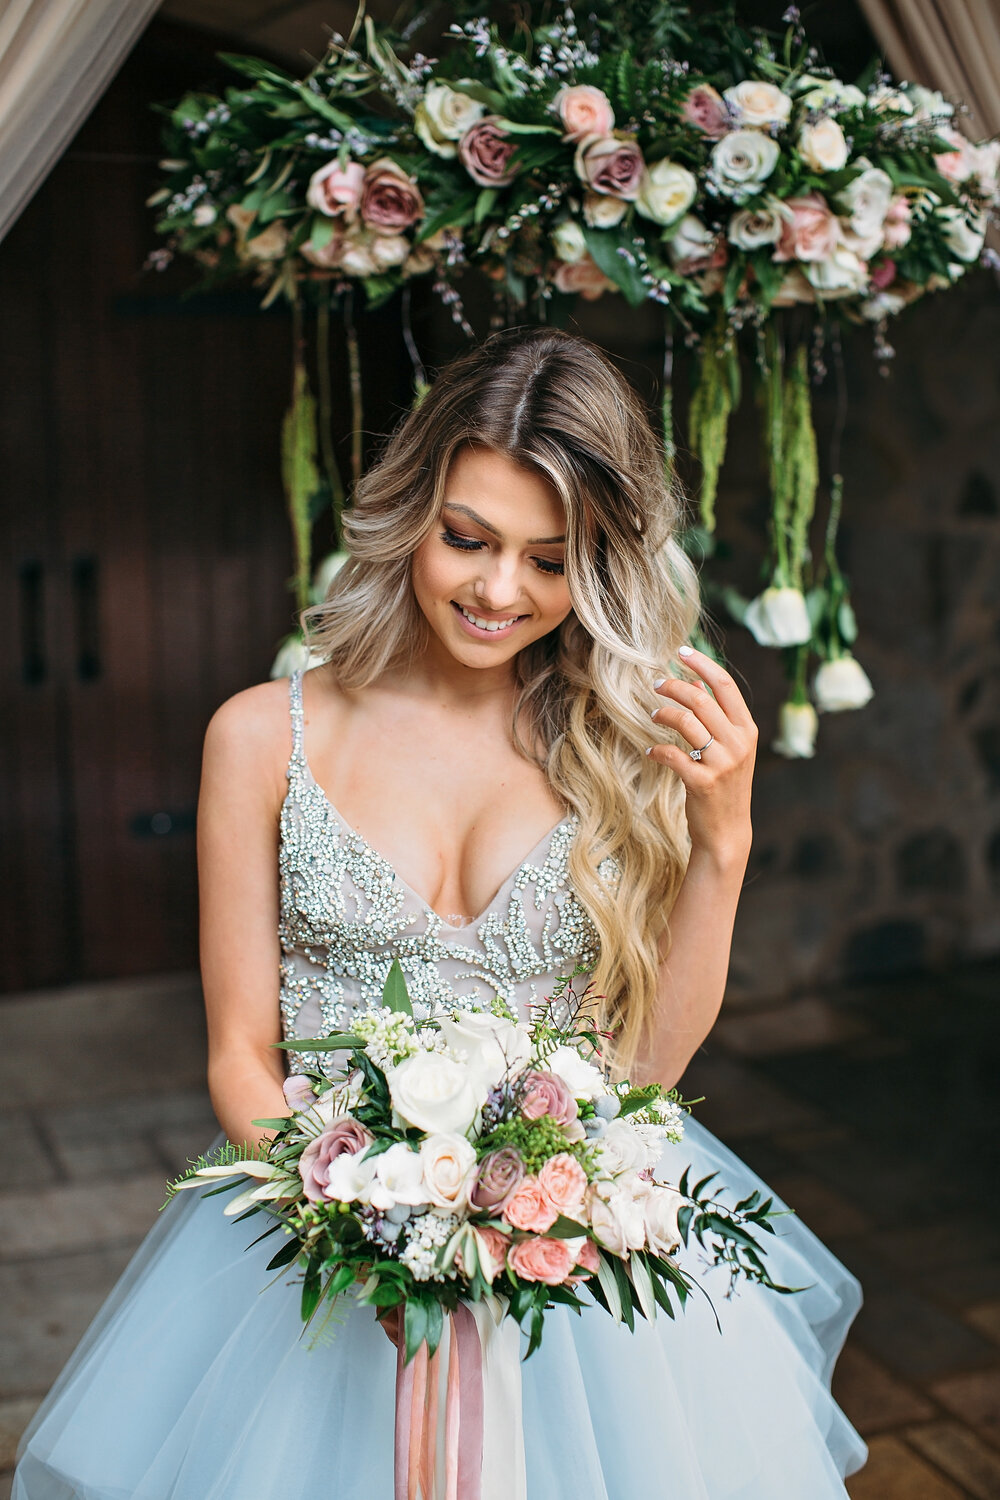 luxury-wedding-bridal-bouquet-details-garden-rose-lilac-lavender-pinks-greenery-flowing-ribbon-blushes-whites-upscale-inspiration-northern-california-sonoma-v-sattui-florist-design-violette-fleurs-anna-perevertaylo.jpg